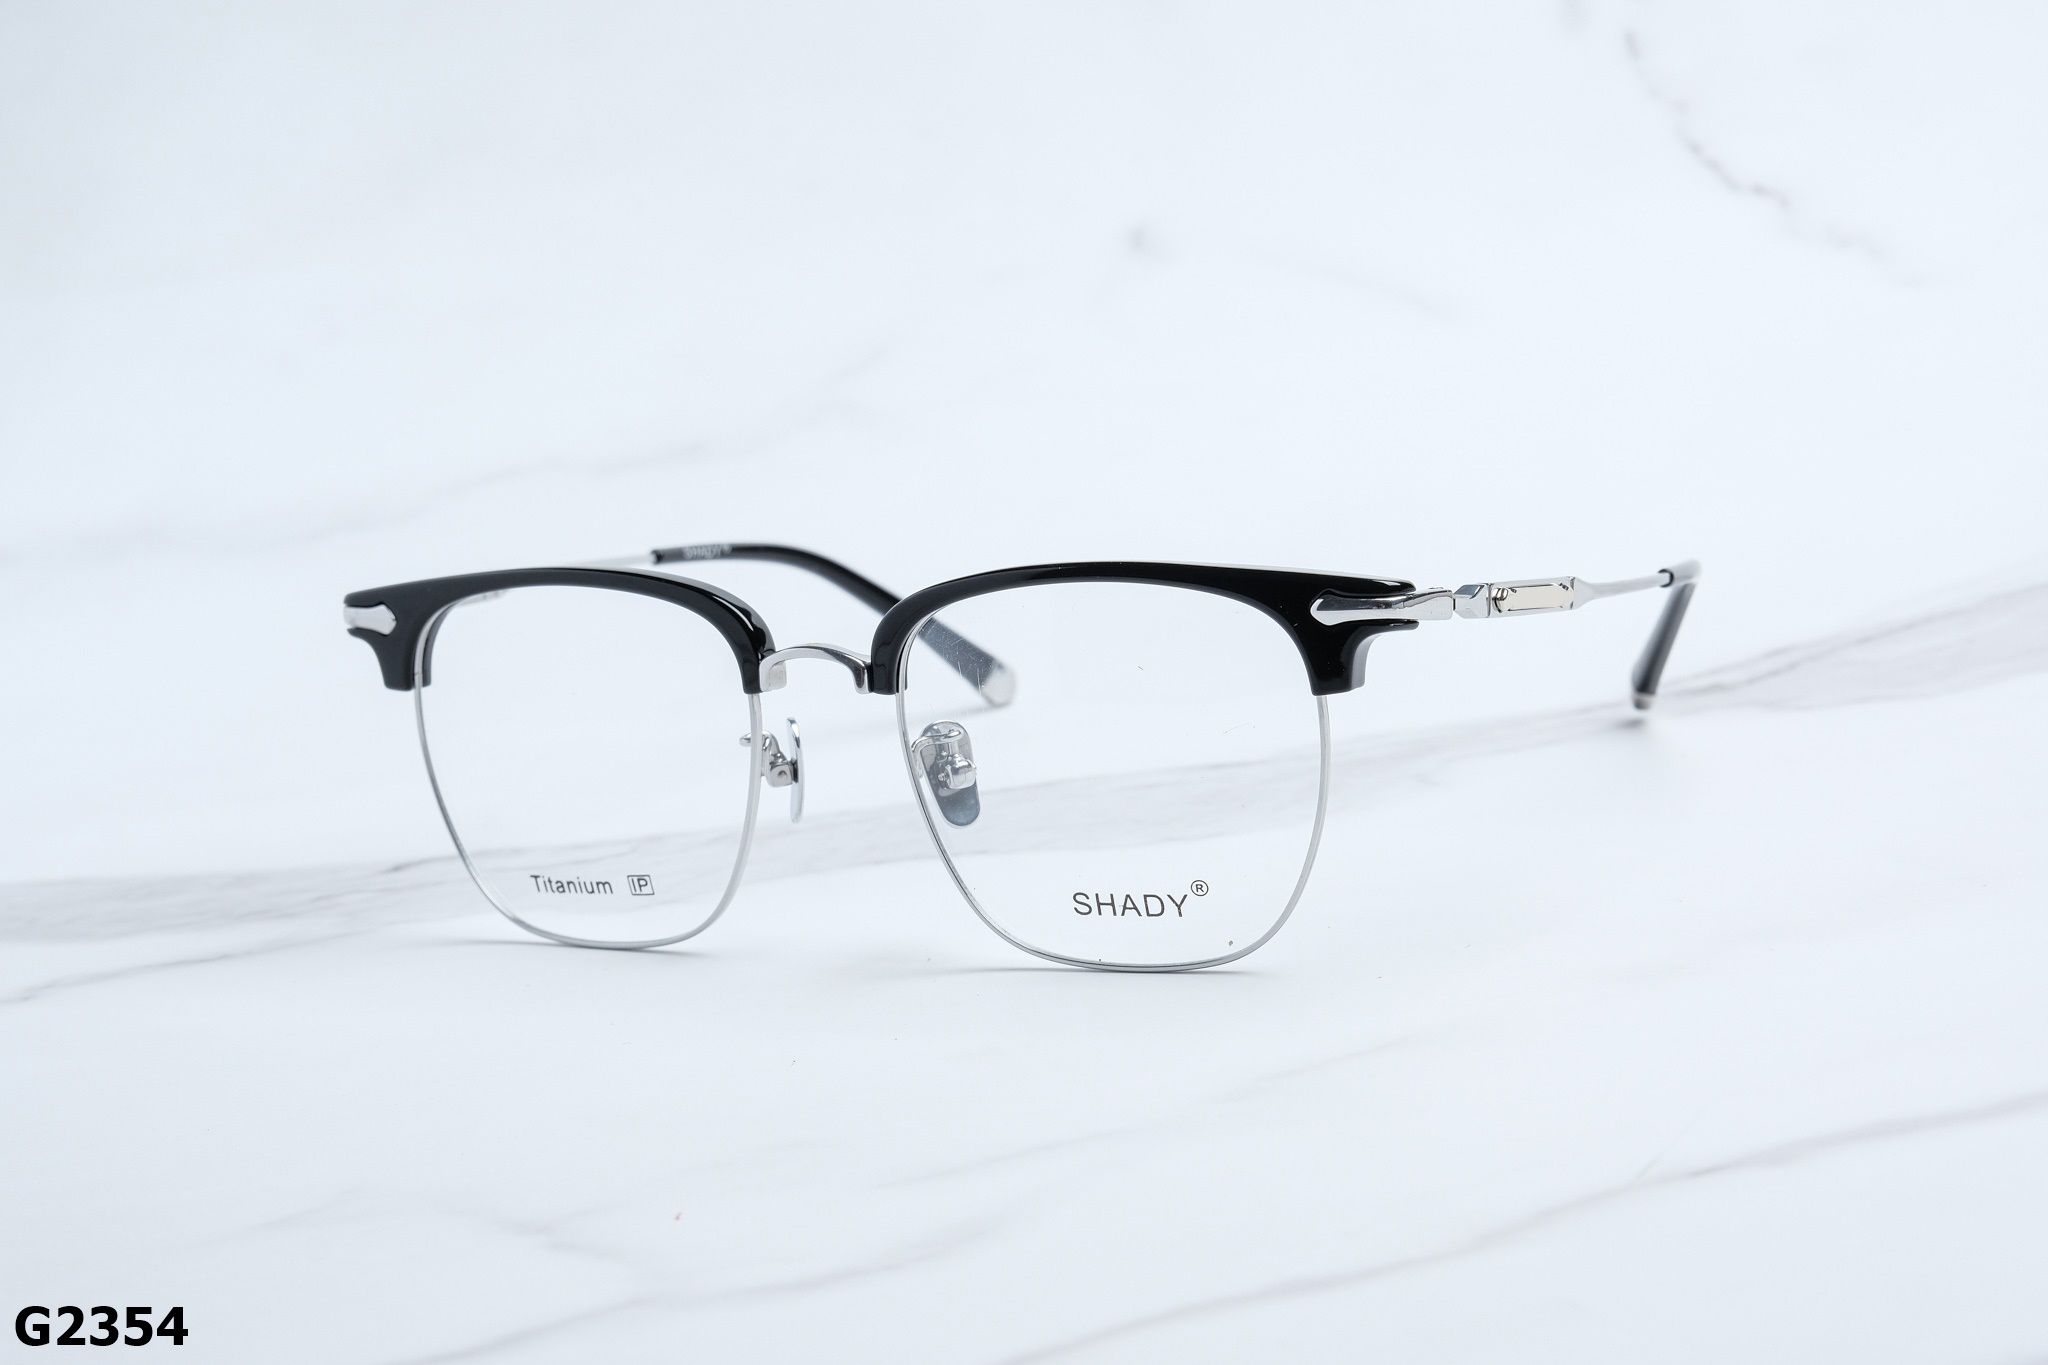  SHADY Eyewear - Glasses - G2354 